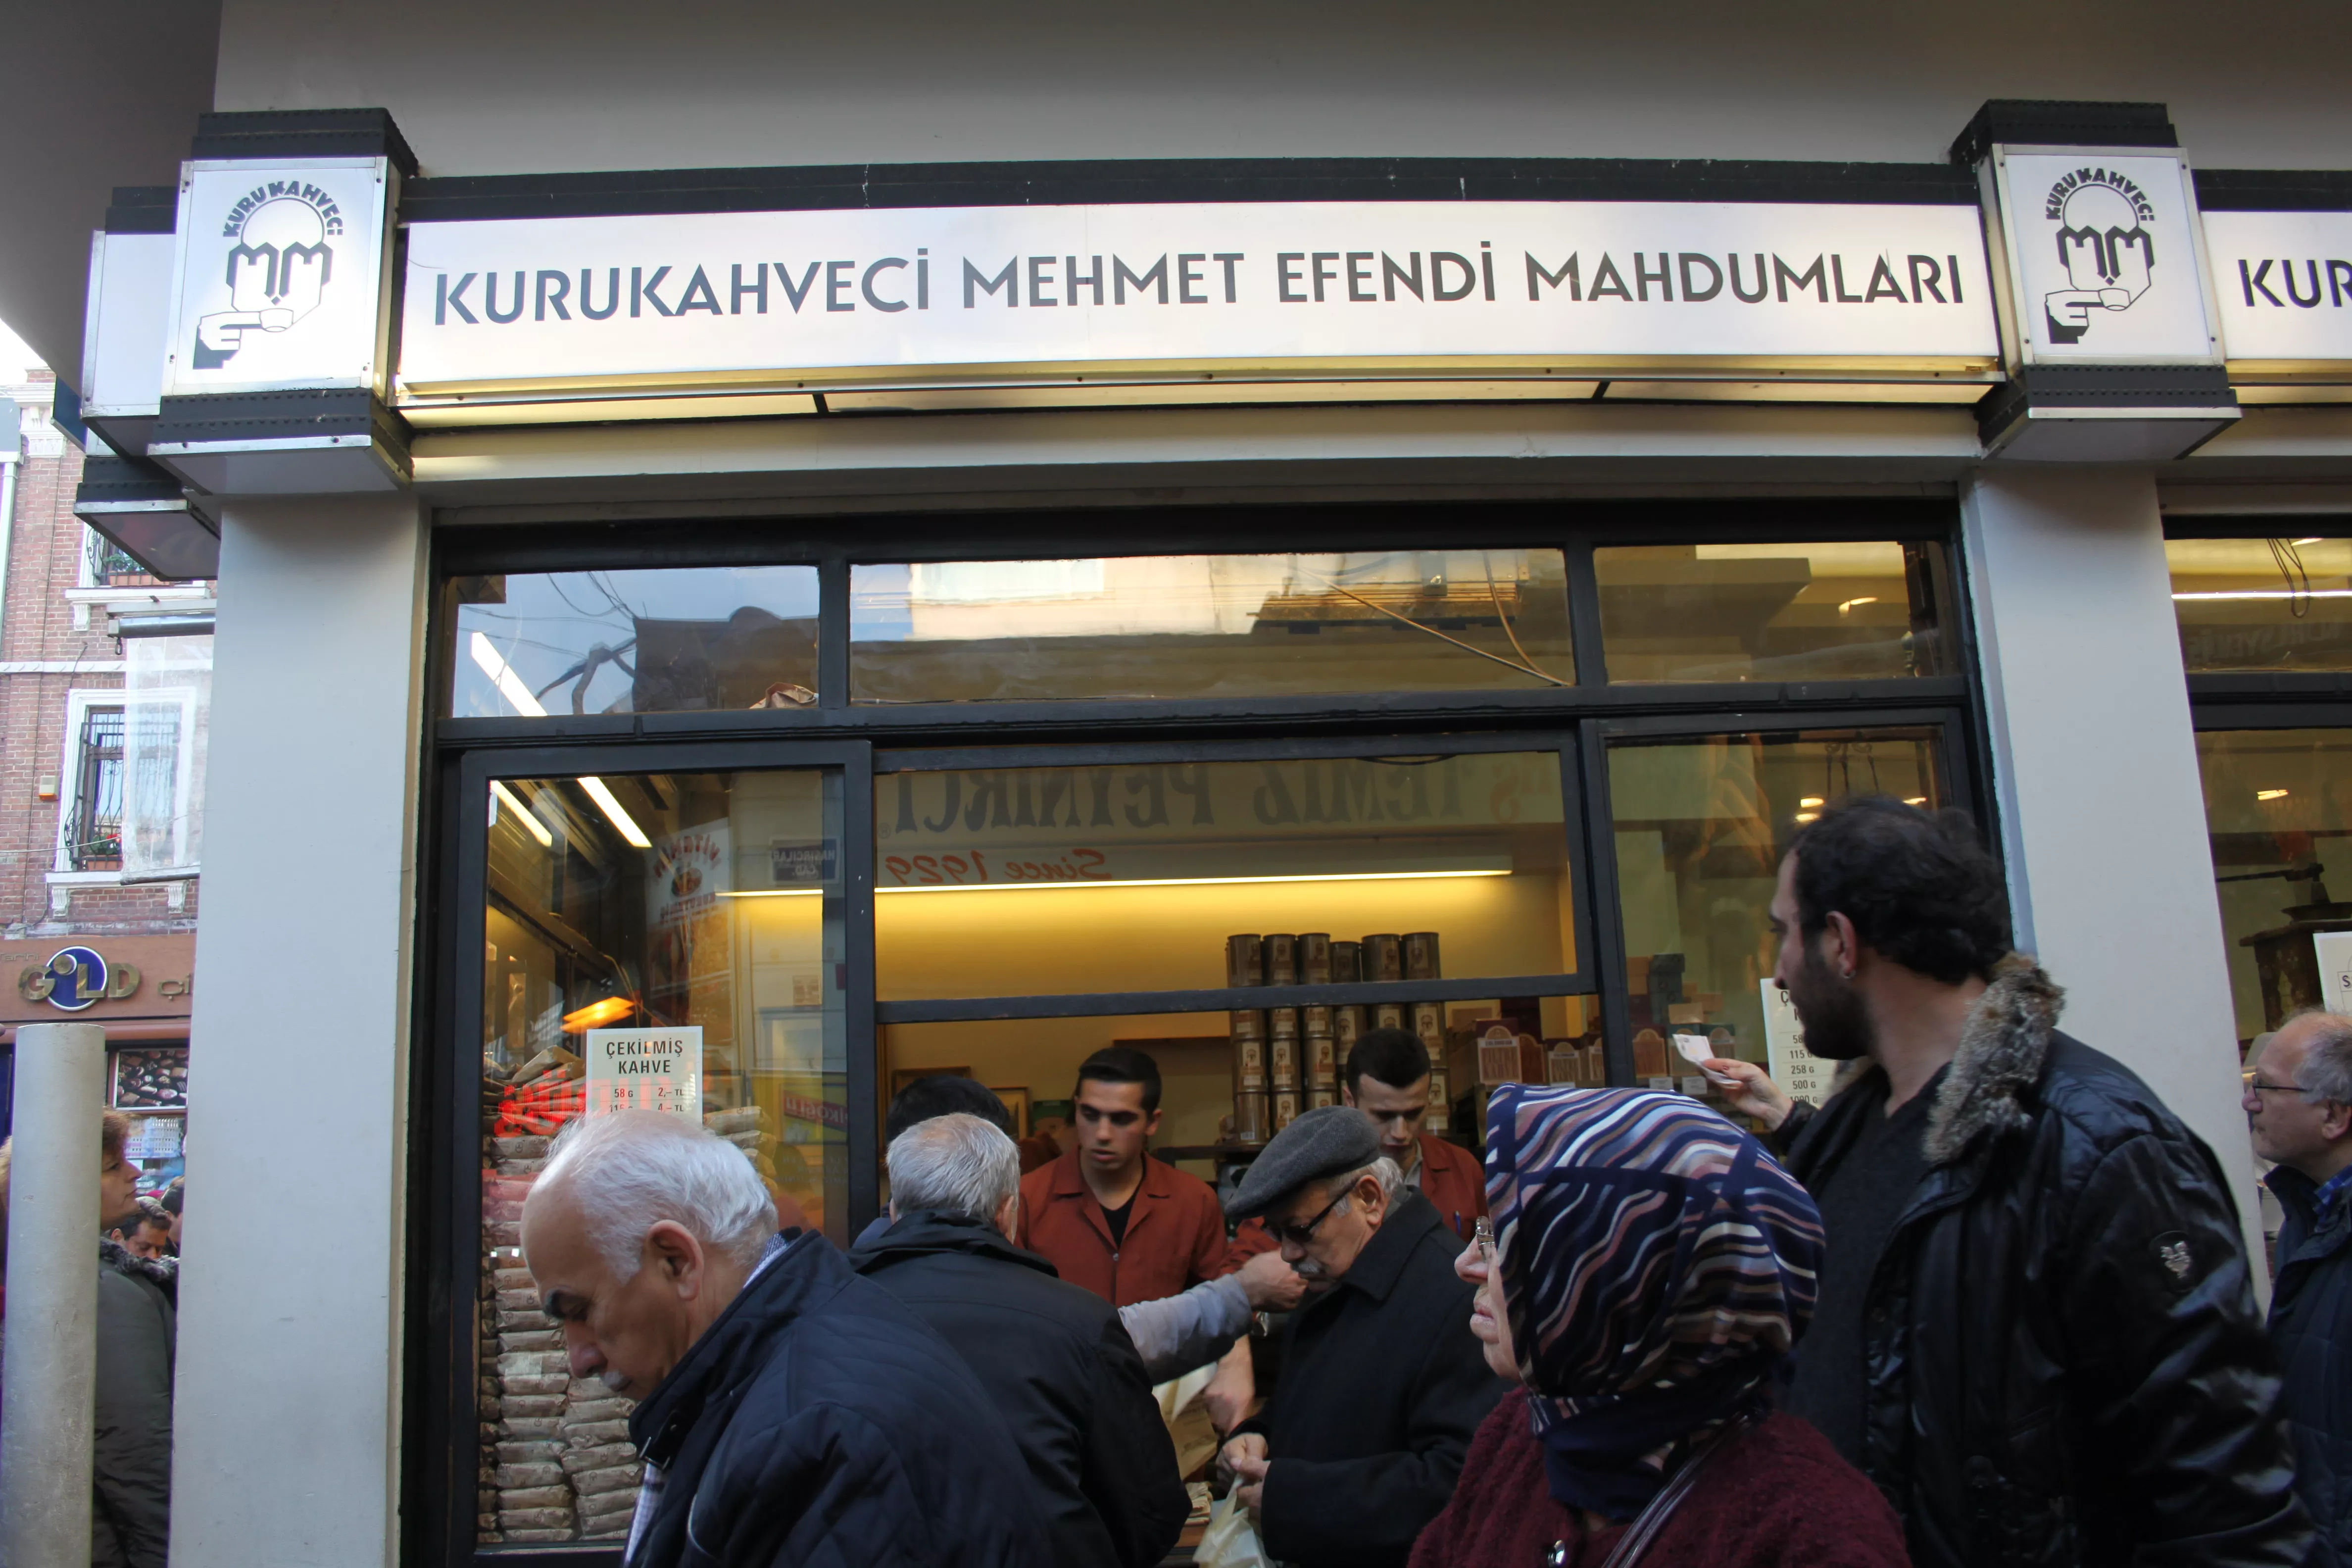 Kurukahveci Mehmet Efendi in Turkey, central_asia | Coffee - Country Helper